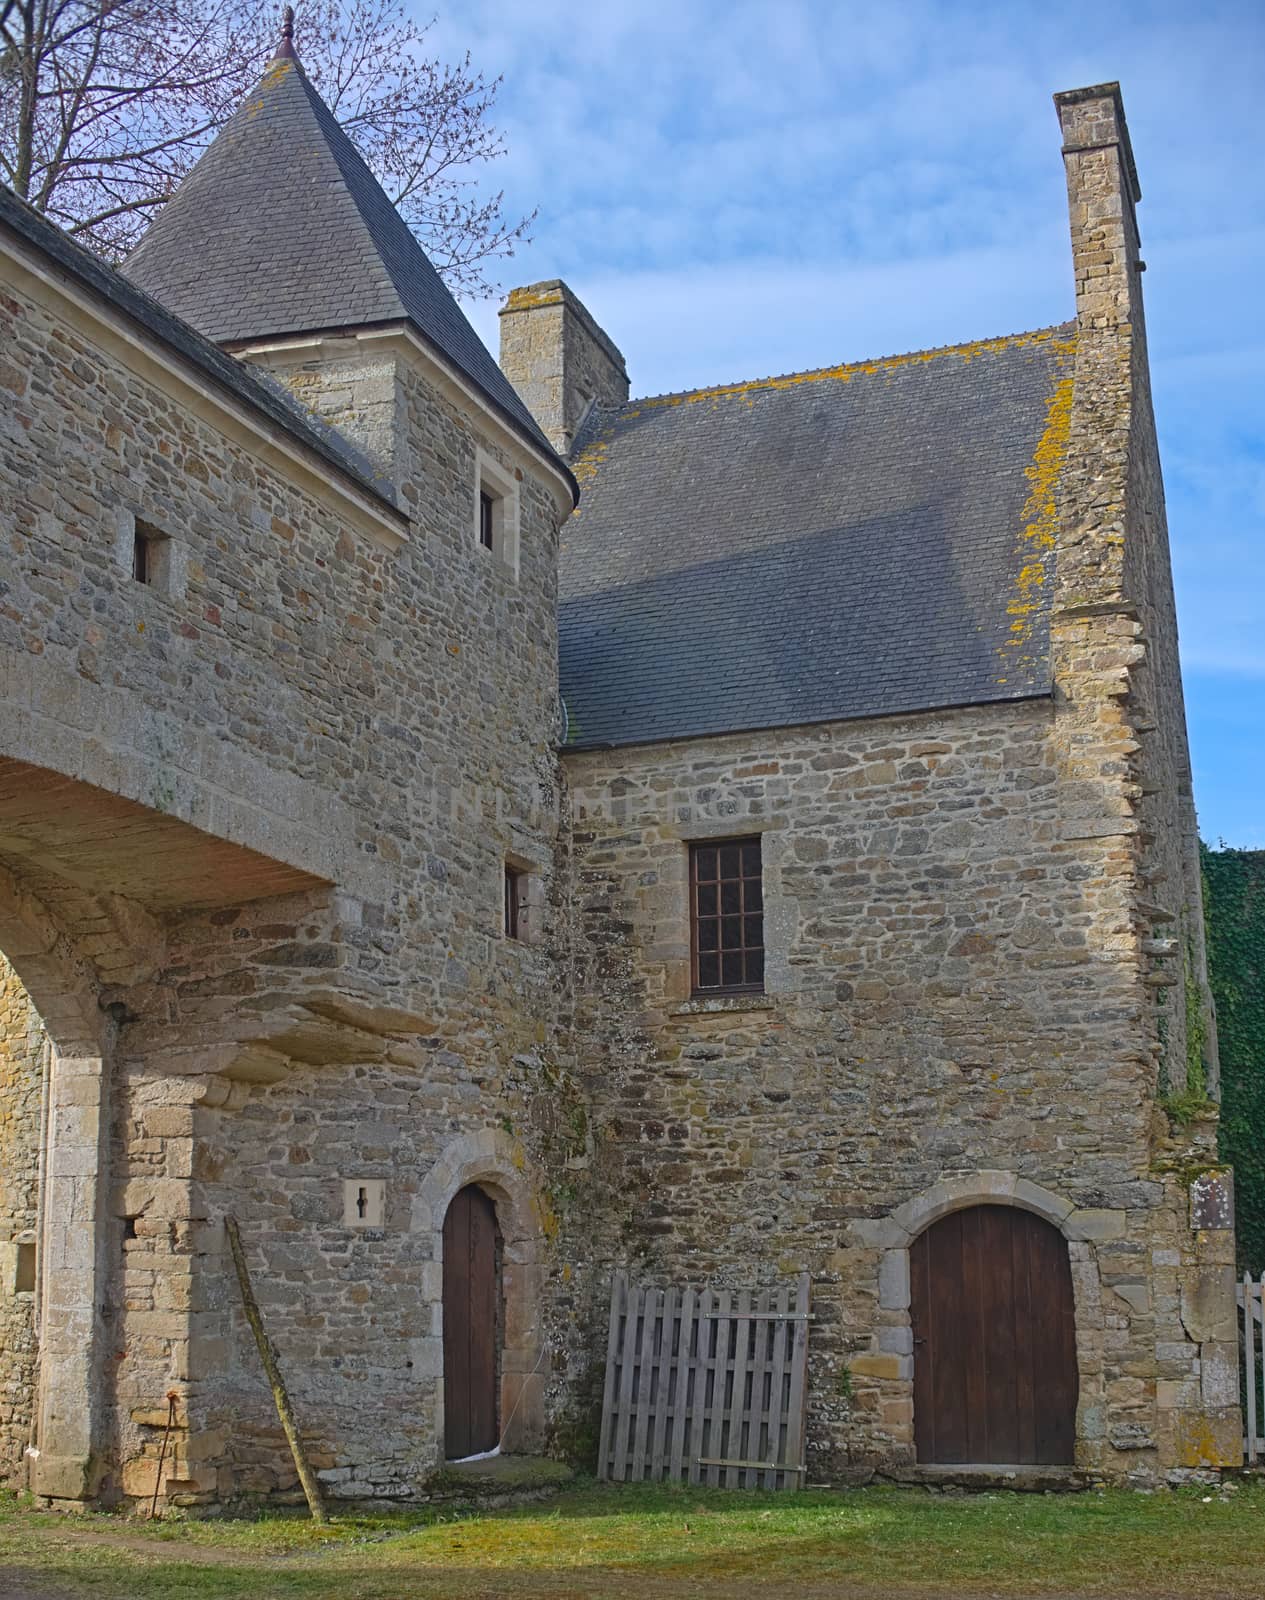 Gate and entrance building into castle Monfert, France by sheriffkule